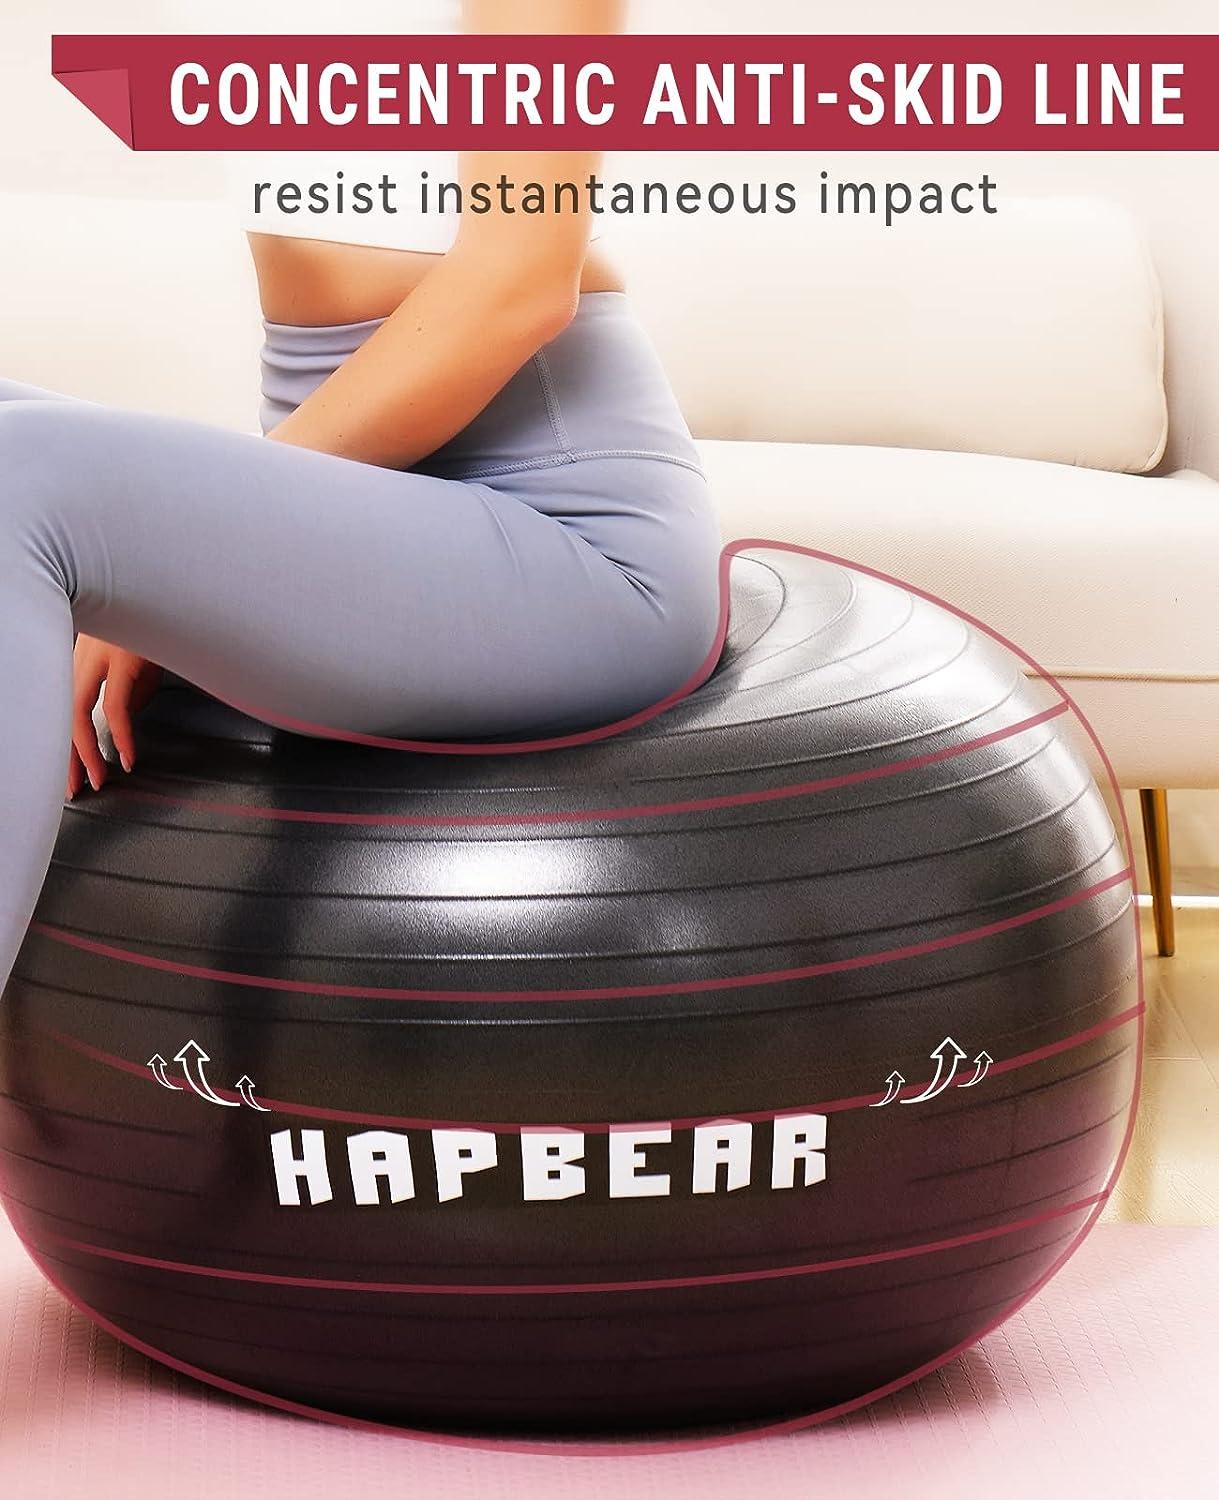 Exercise Balls - Burst Resistant Pilates & Yoga Balls